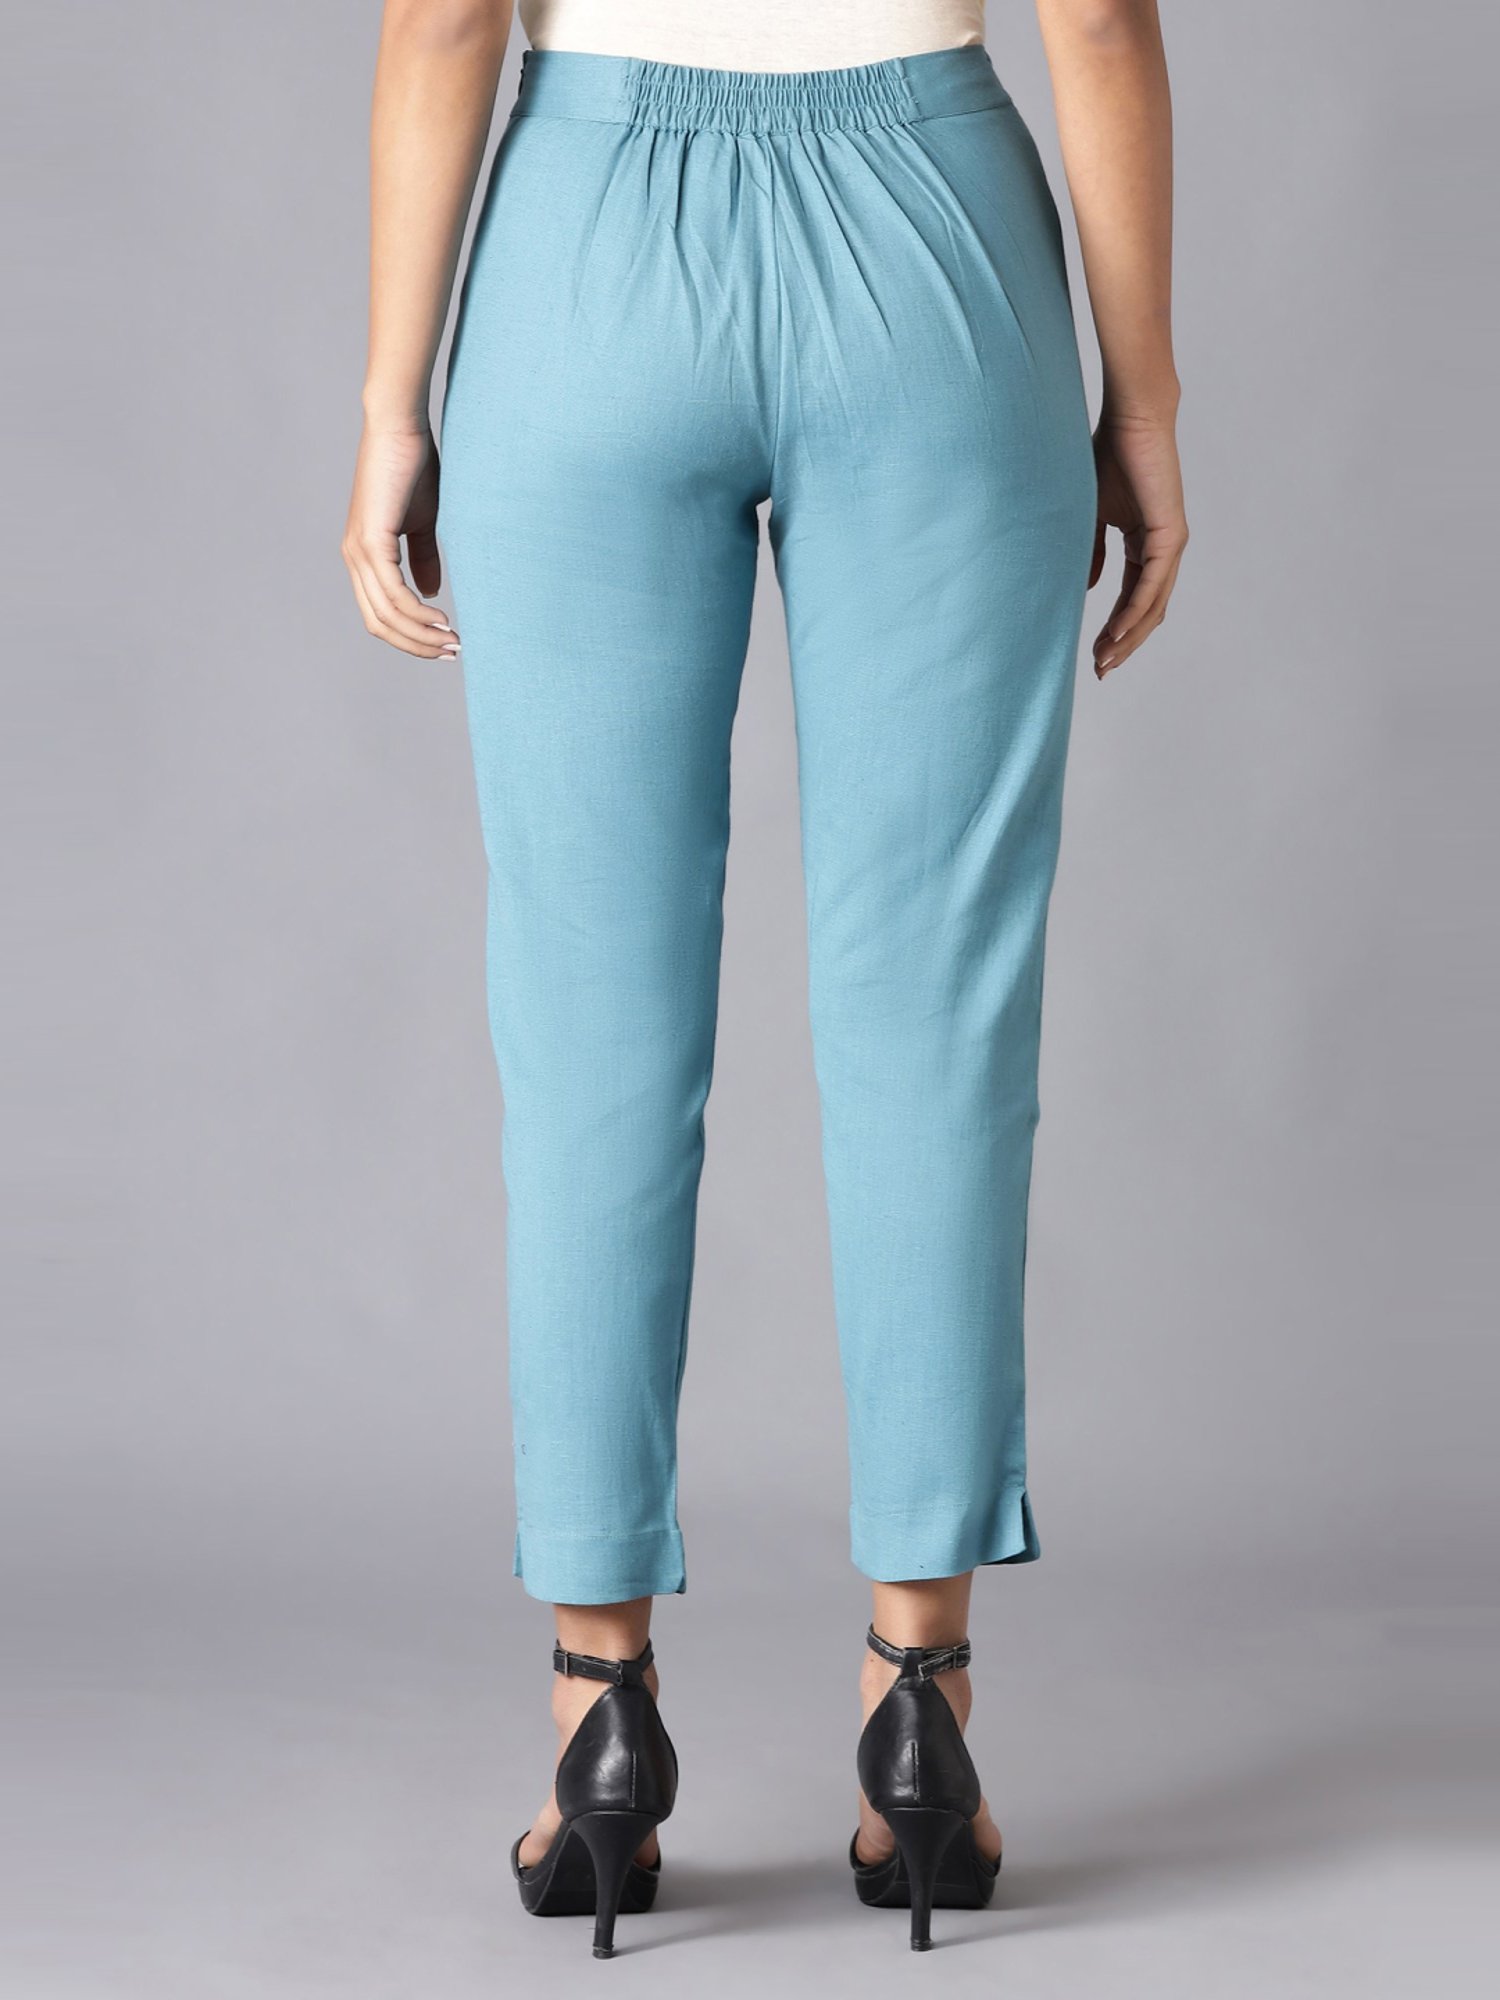 Lyra Blue Cotton Ankle Length Pants